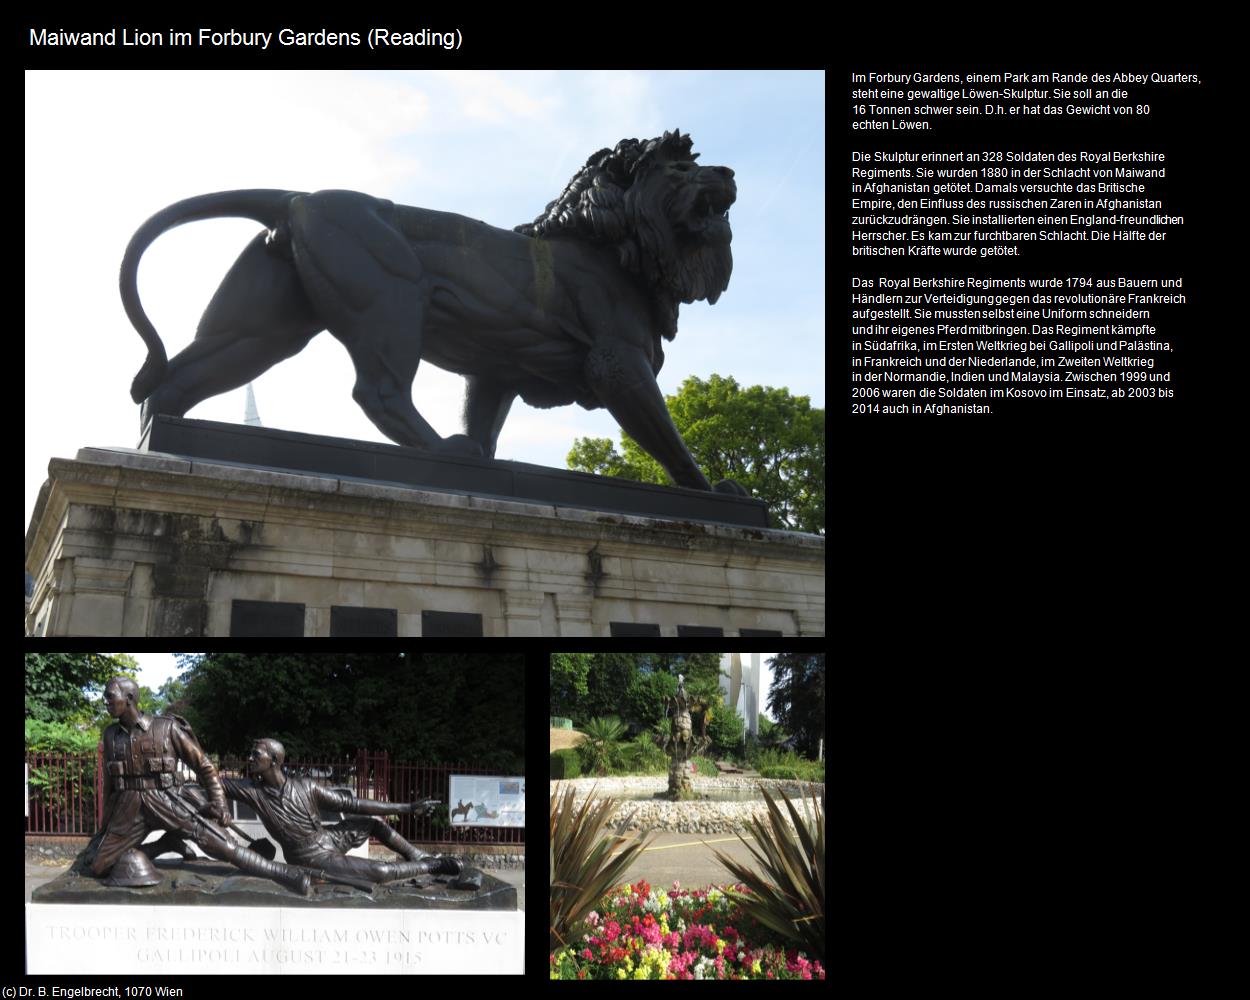 Maiwand Lion im Forbury Gardens  (Reading, England ) in Kulturatlas-ENGLAND und WALES